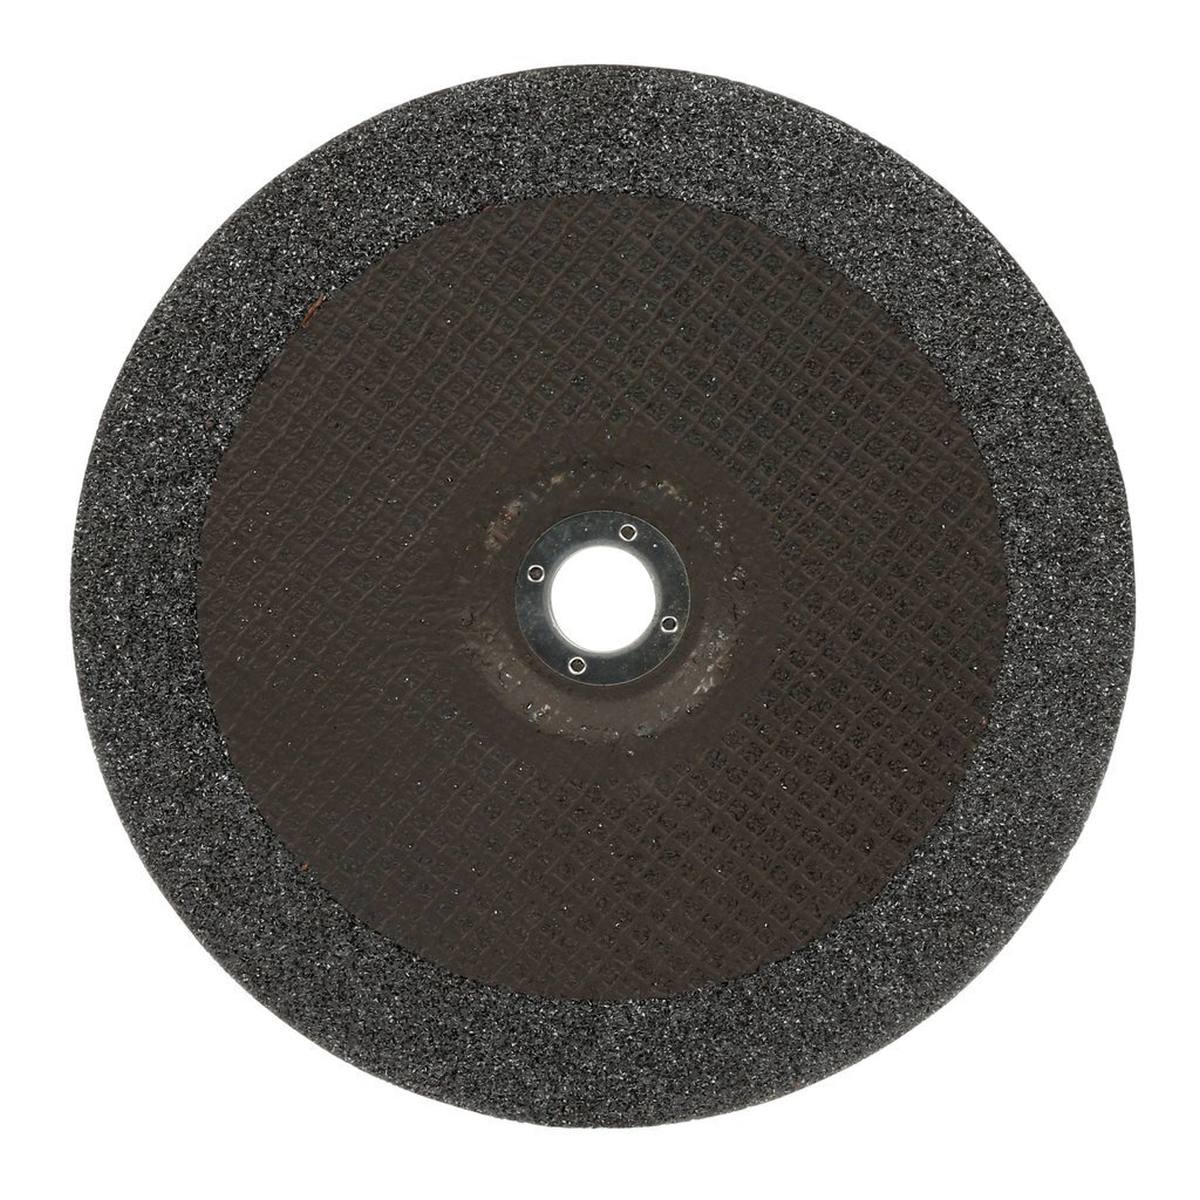 3M Cubitron II Rough grinding disc, 150 mm, 7.0 mm, 22.23 mm, 36+, type 27